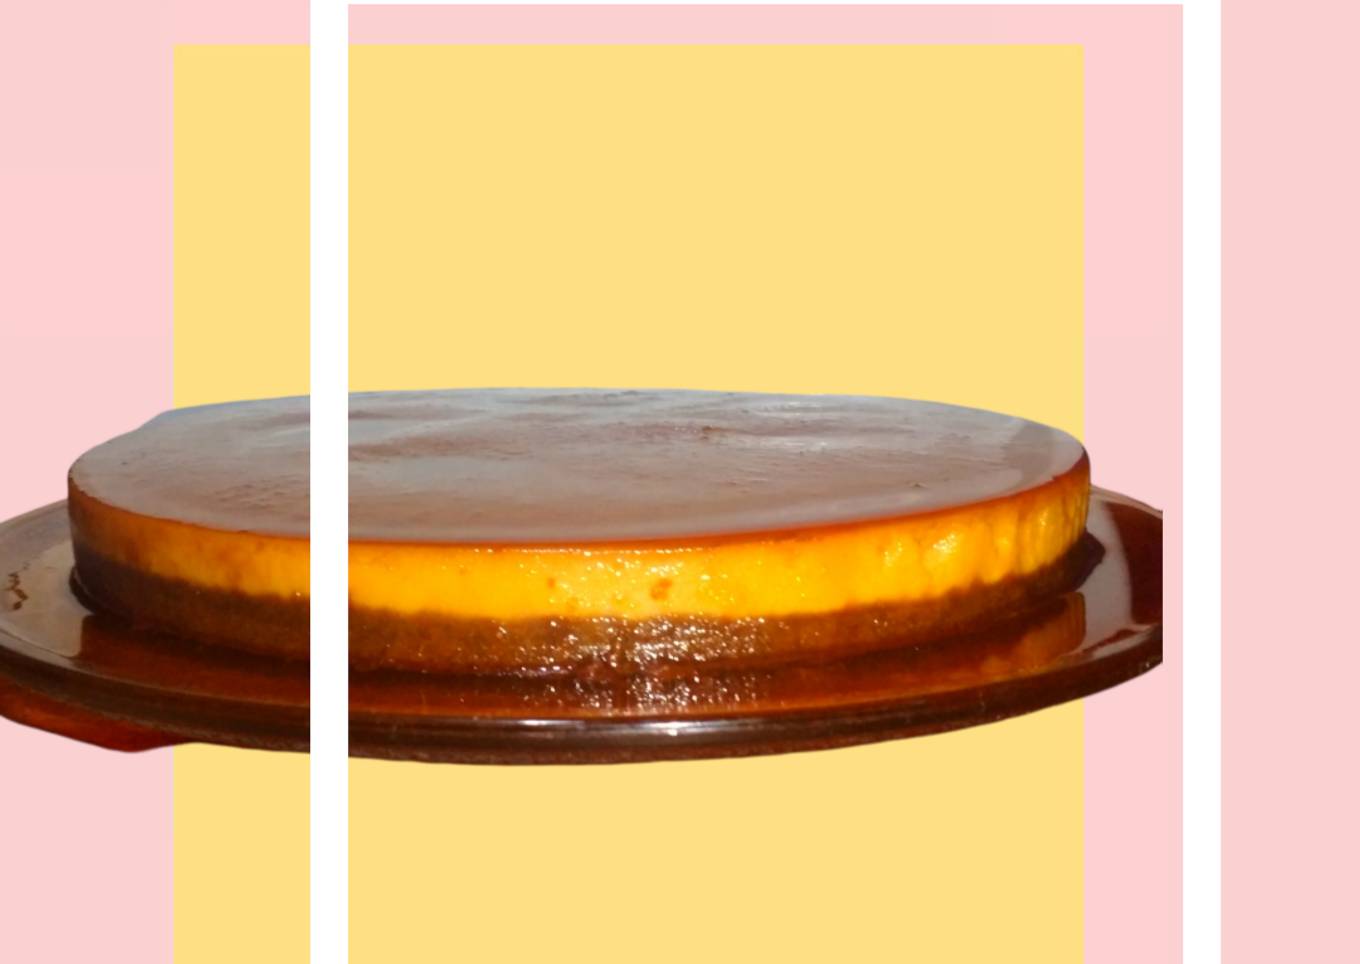 Pastel imposible o chocoflan 🍮 de chocolate semiamargo